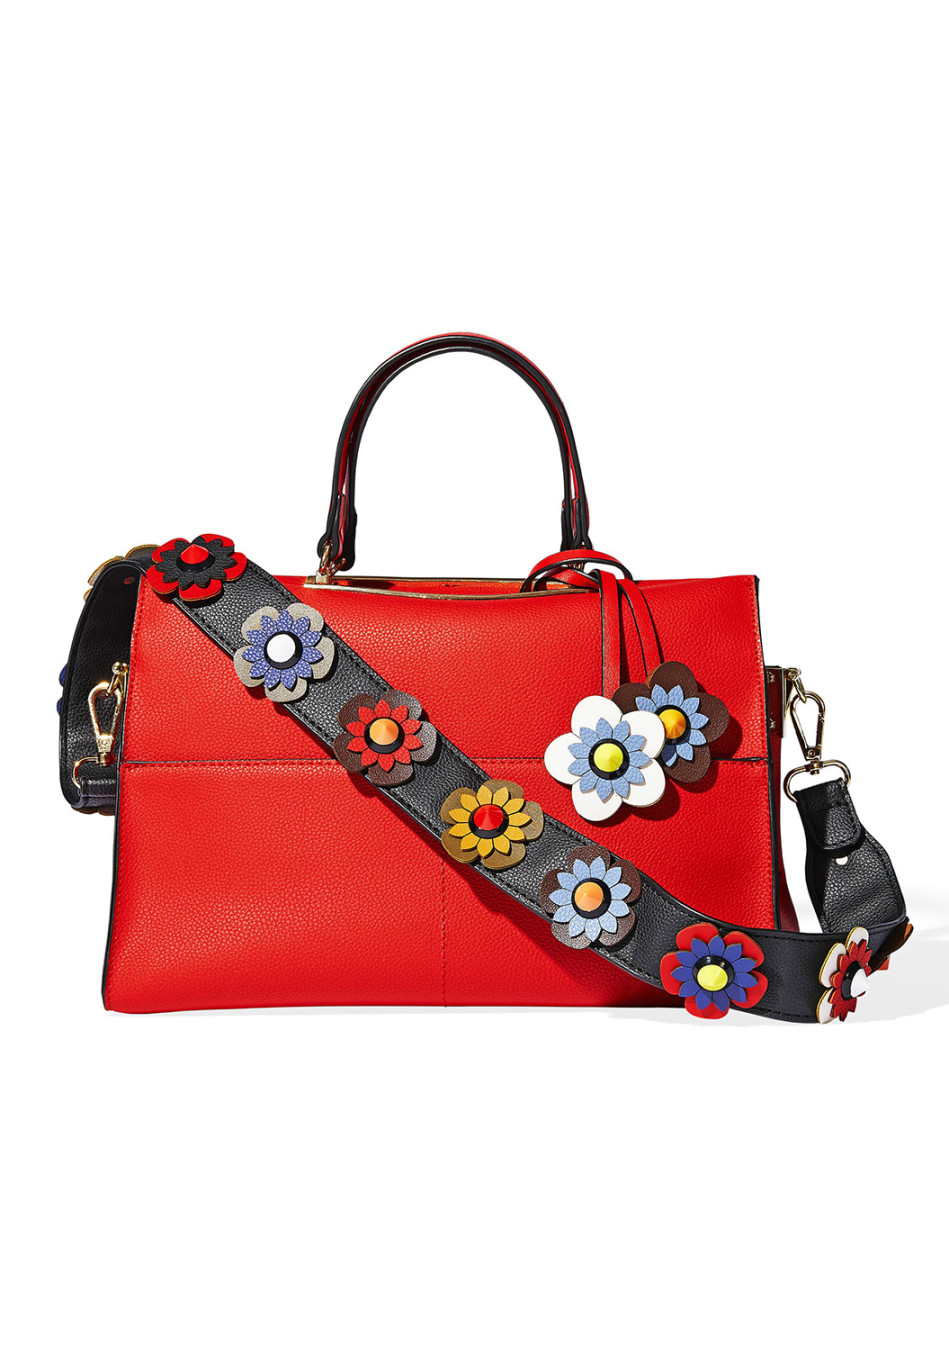 Spring 2018 Fashion Trends Red Handbag